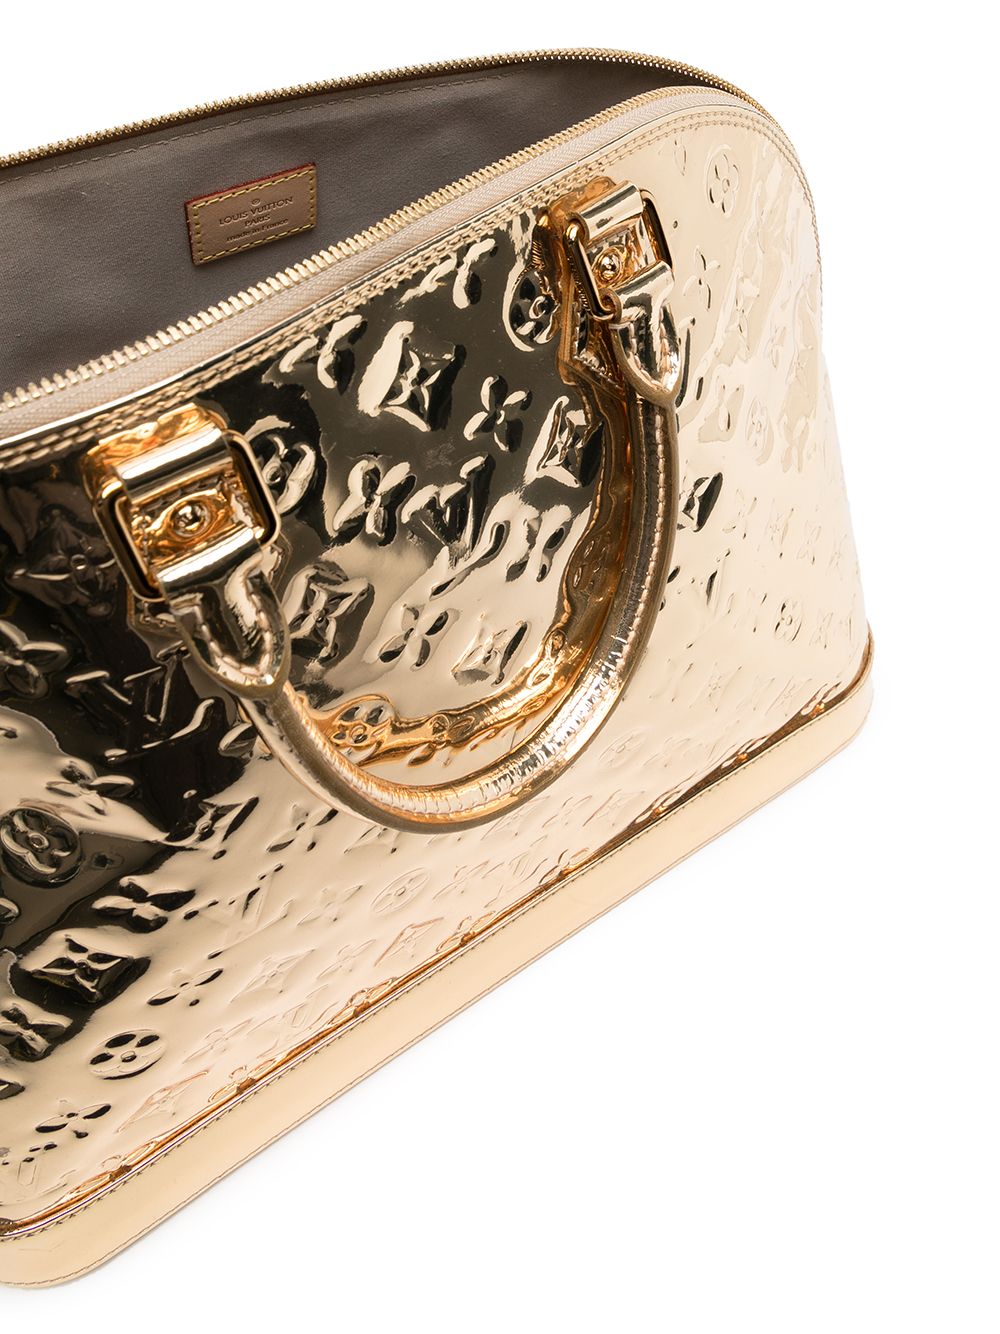 Louis Vuitton Limited Edition Gold Monogram Miroir Leather Alma Gm